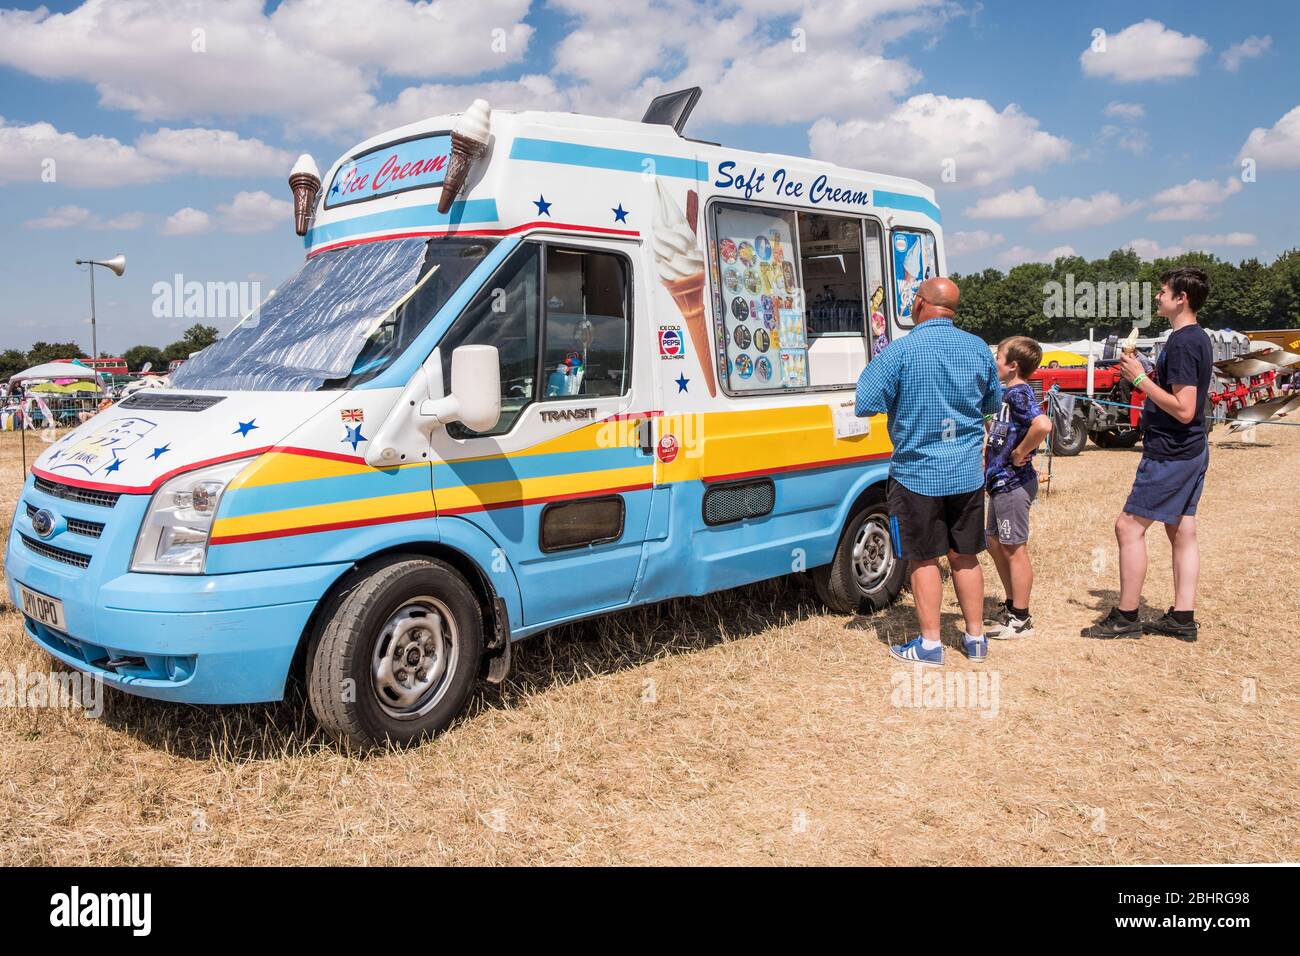 local ice cream van